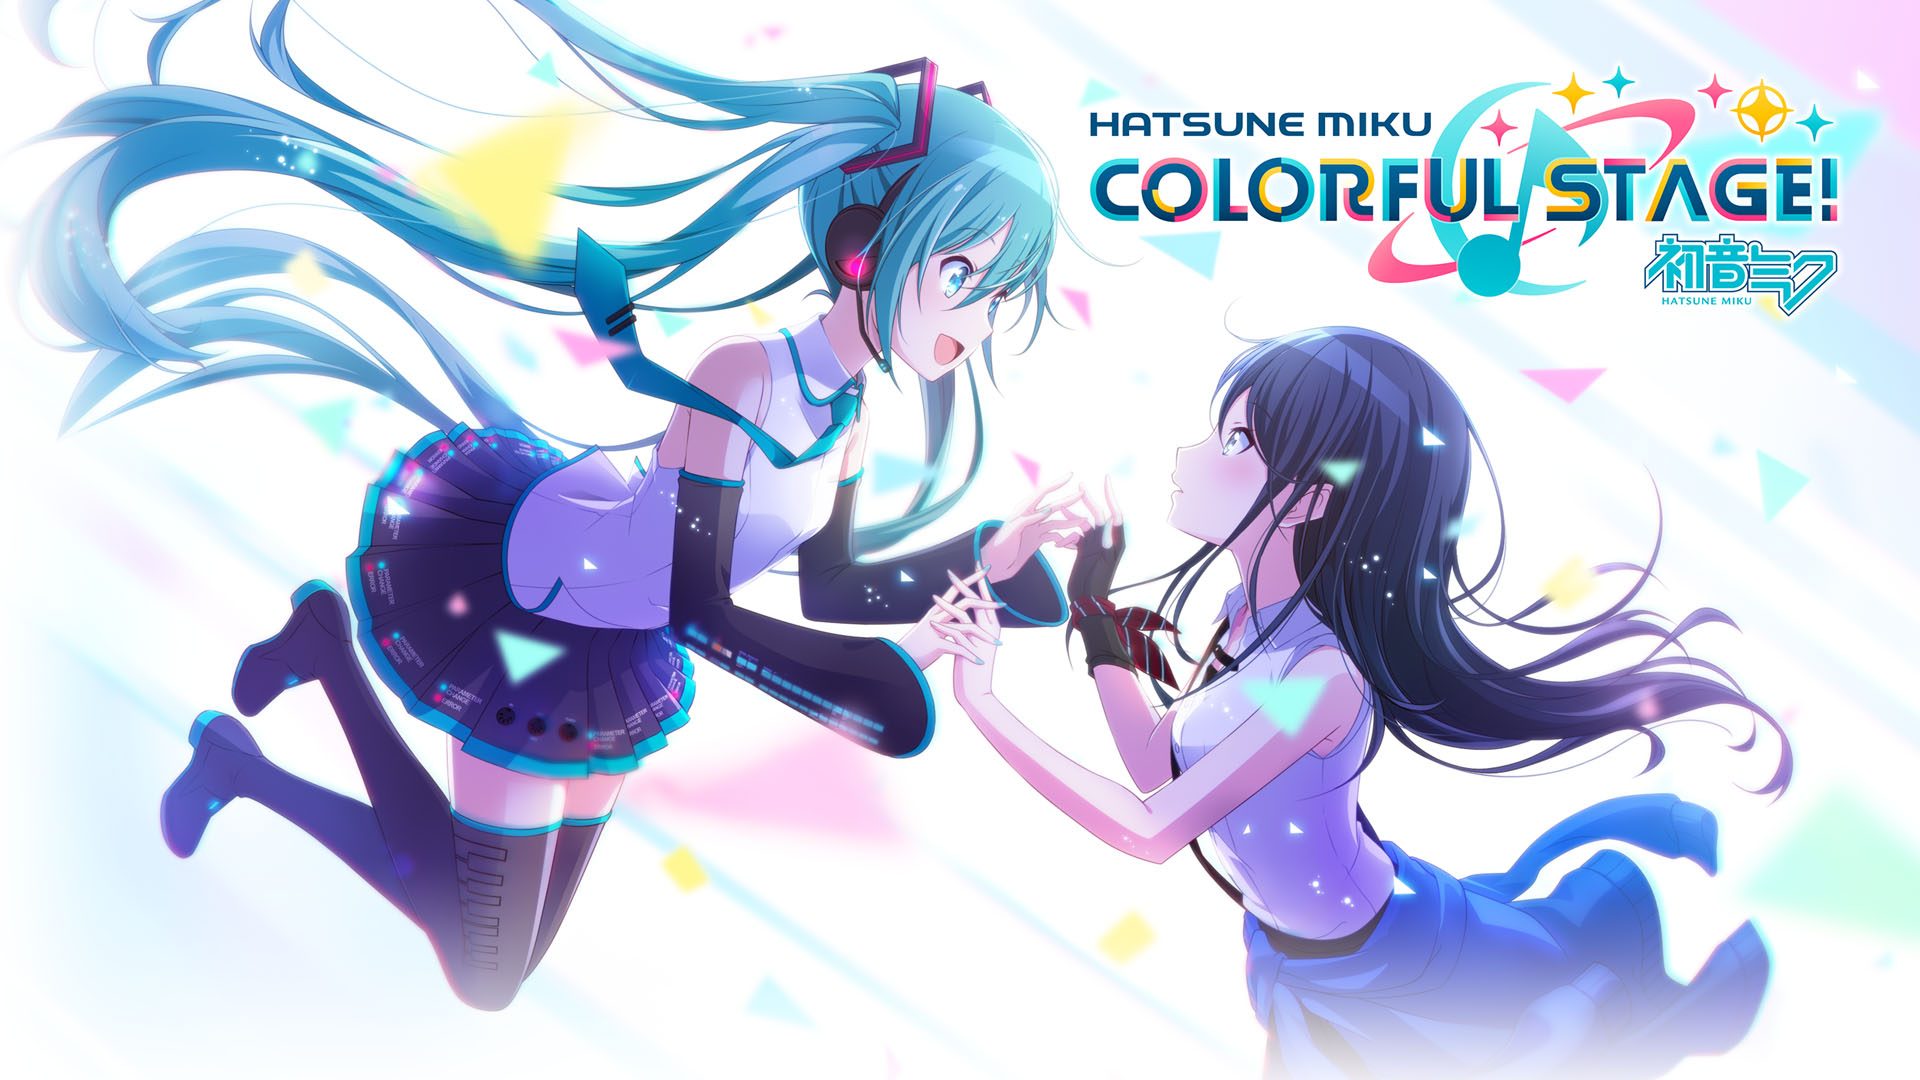 hatsune-miku-colorful-stage-08-31-21-1-3491314